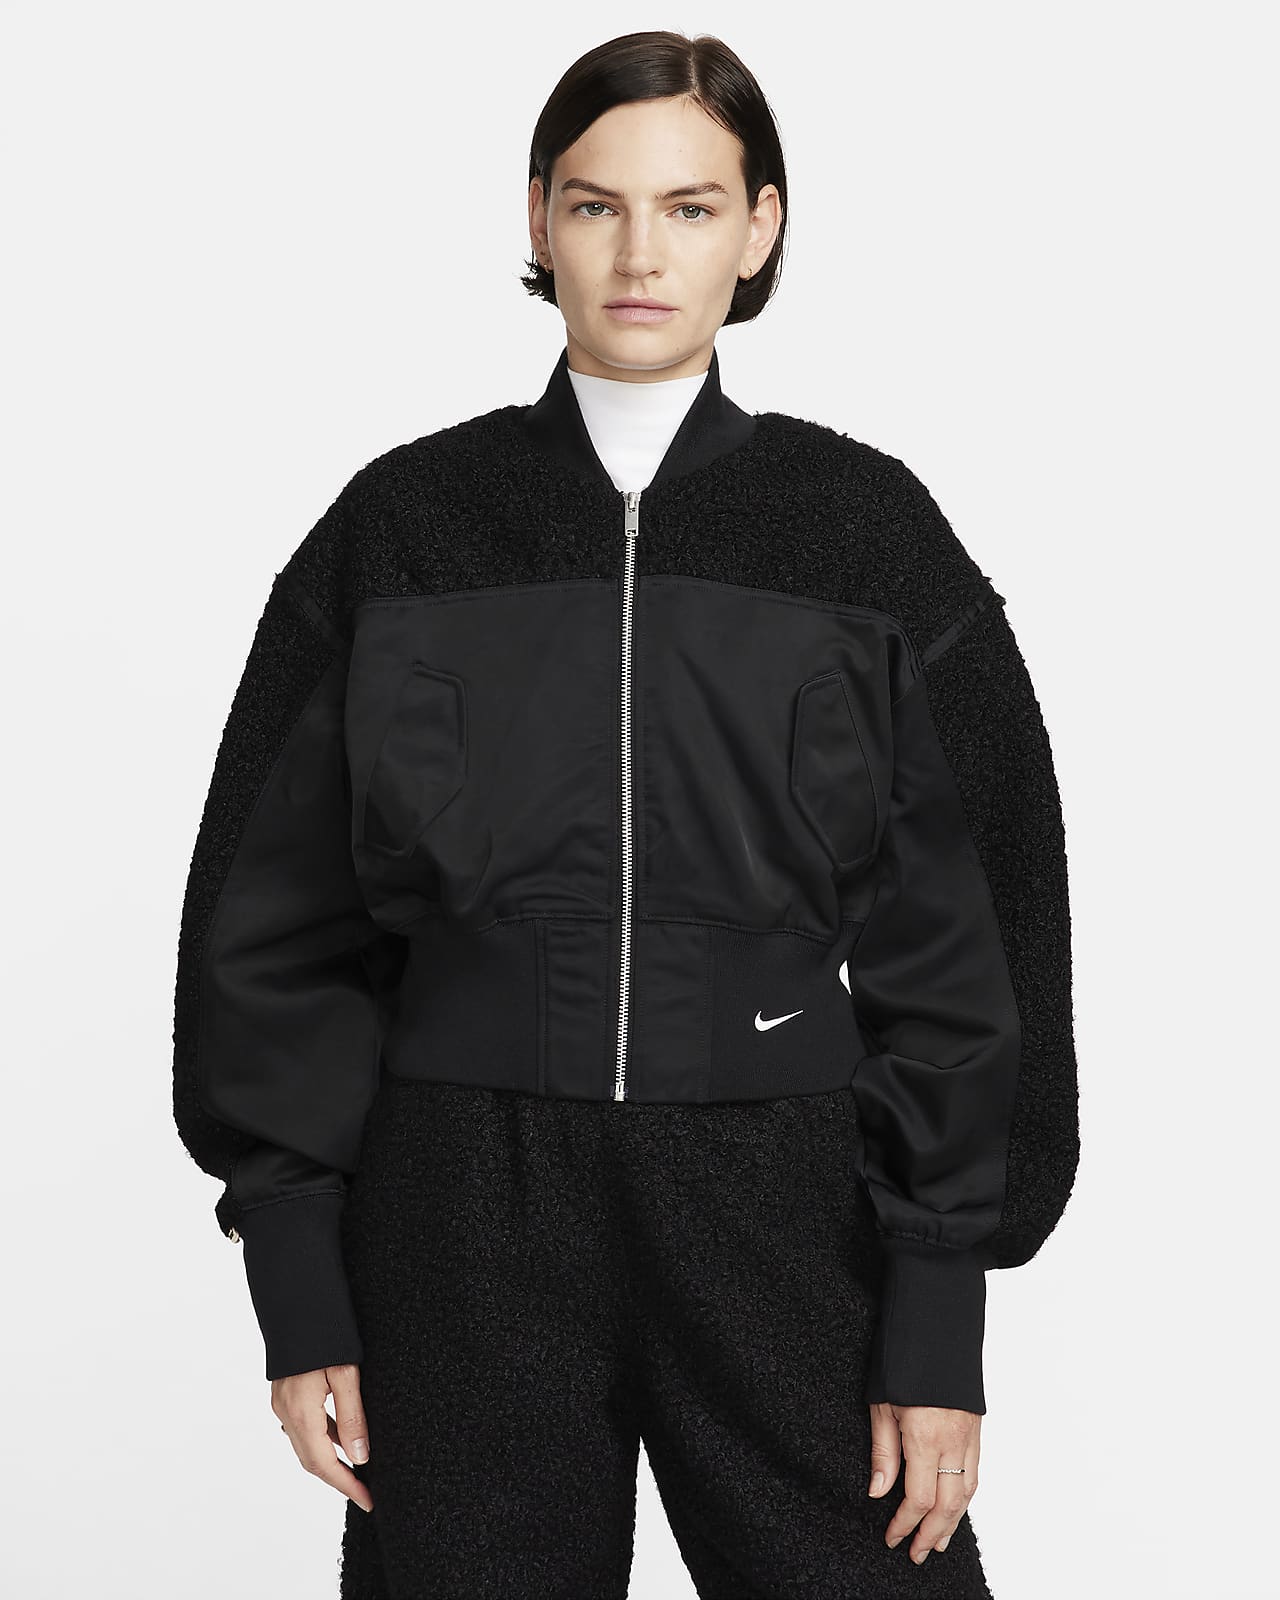 Nike longline bomber jacket in black - ShopStyle